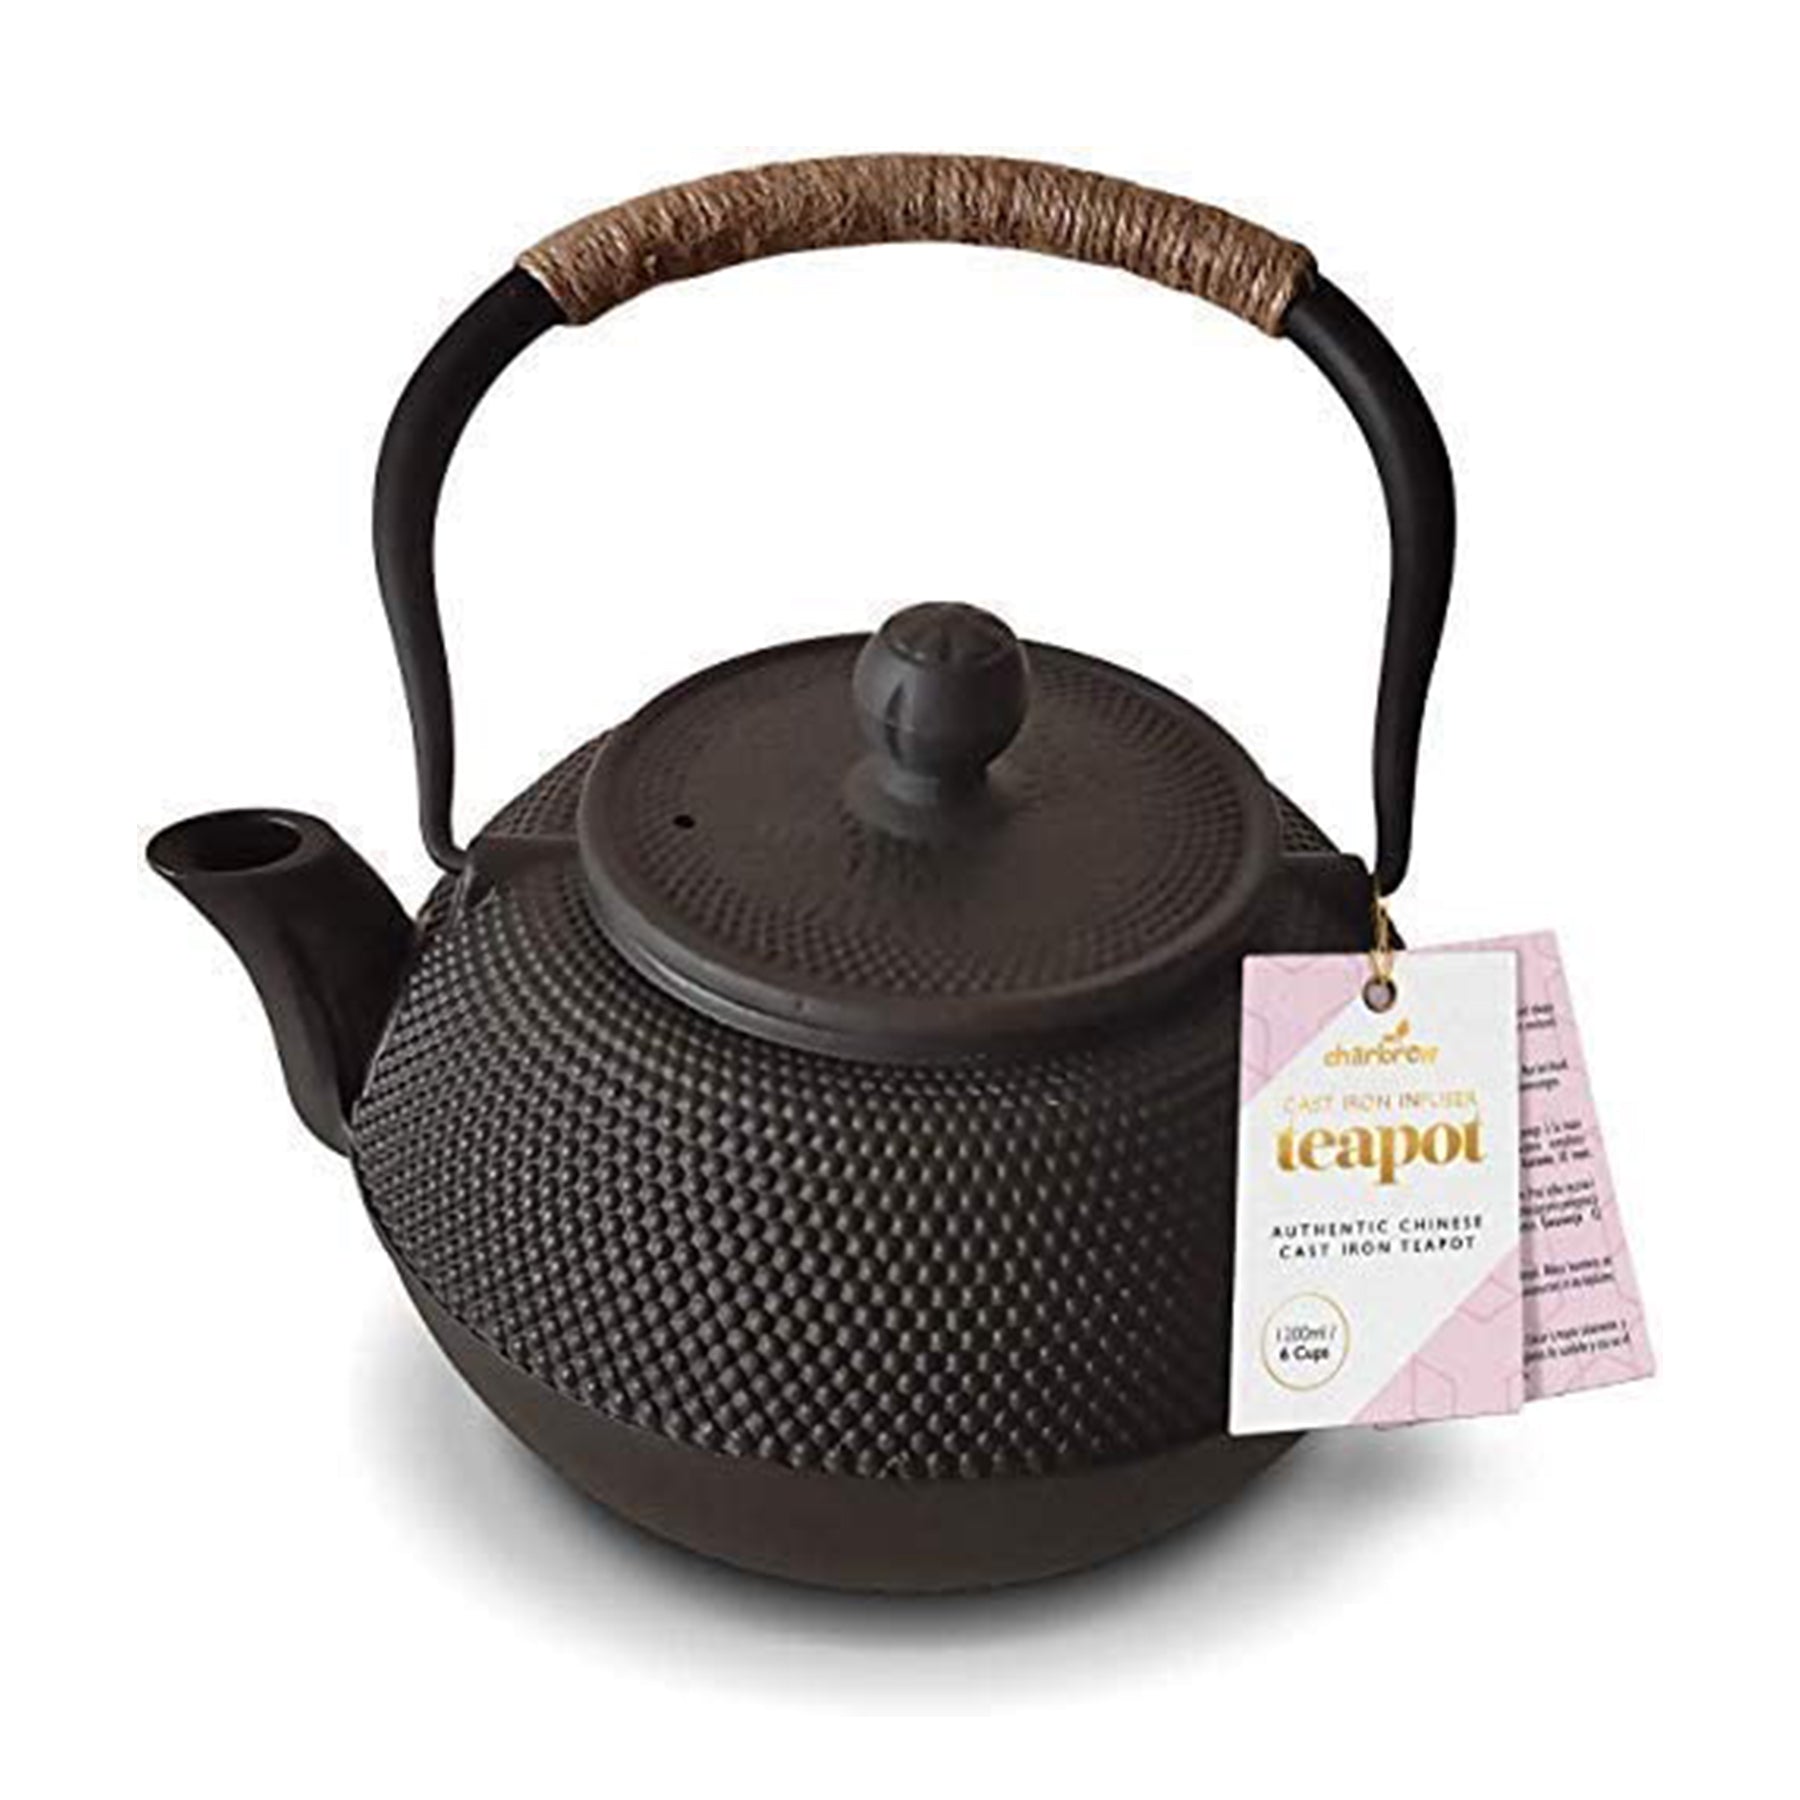 Traditional cast iron black teapot